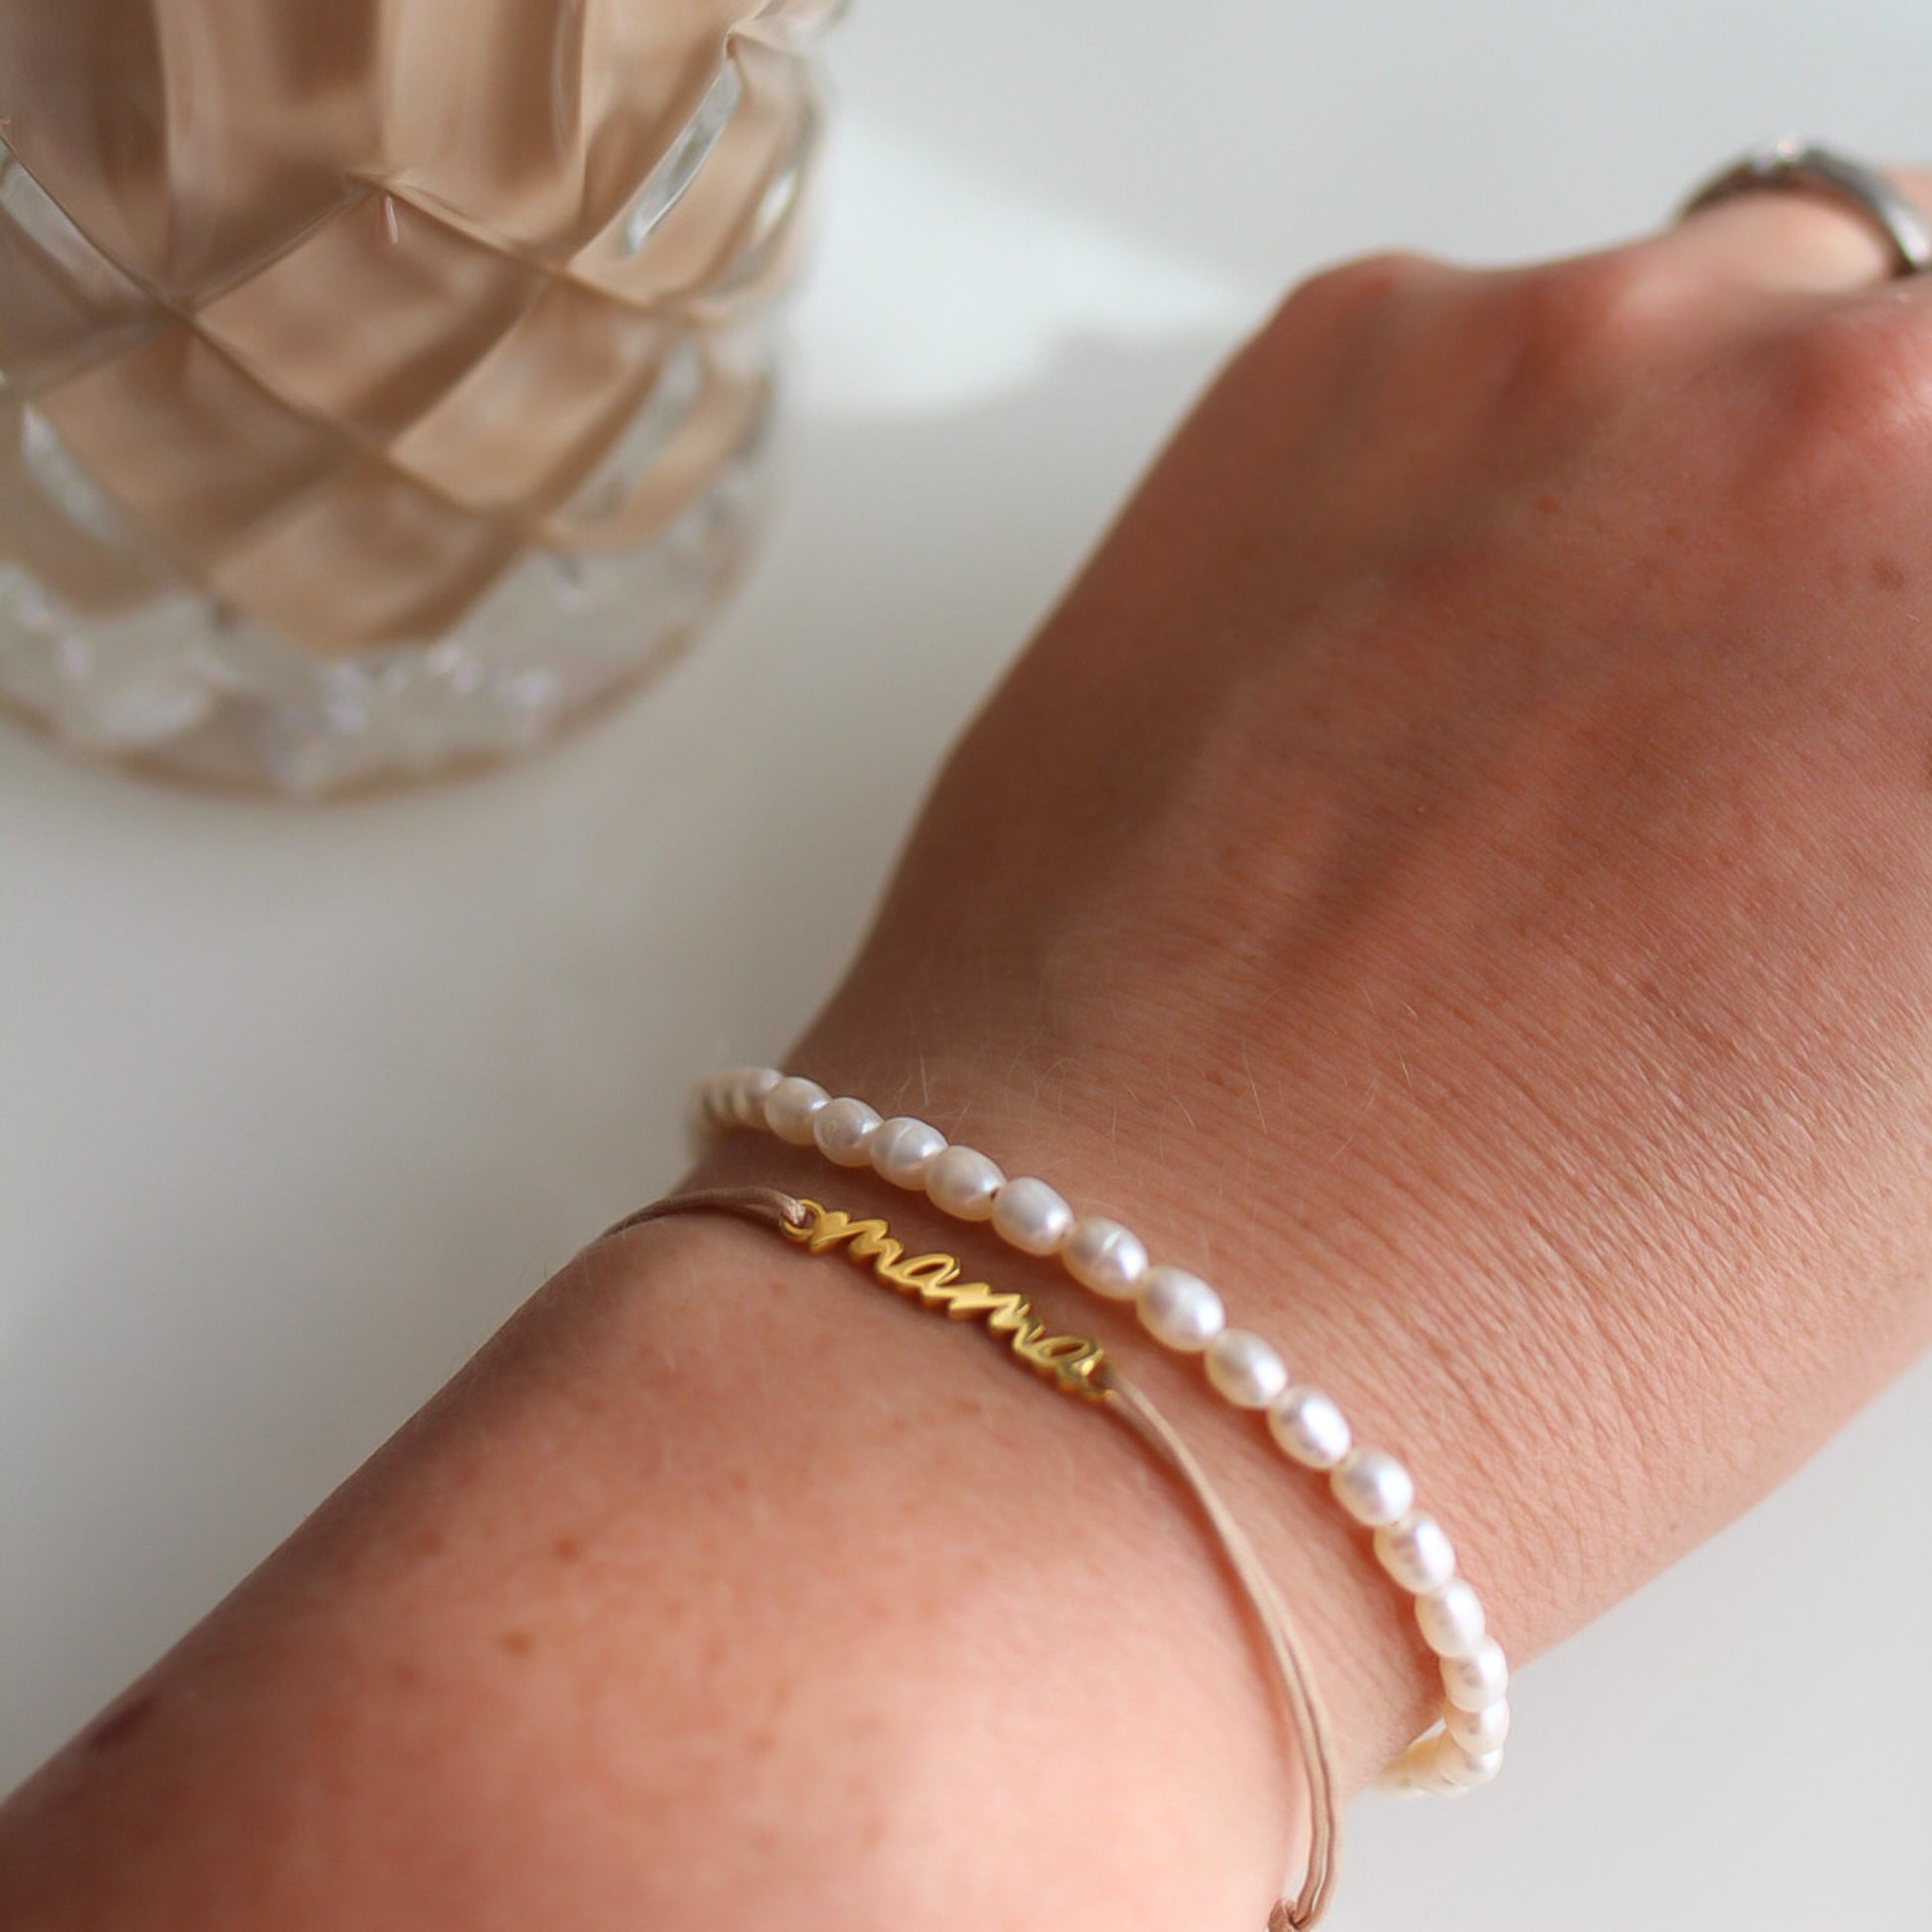 Mama Armband accessories mit goldpedant - Mama geschenk